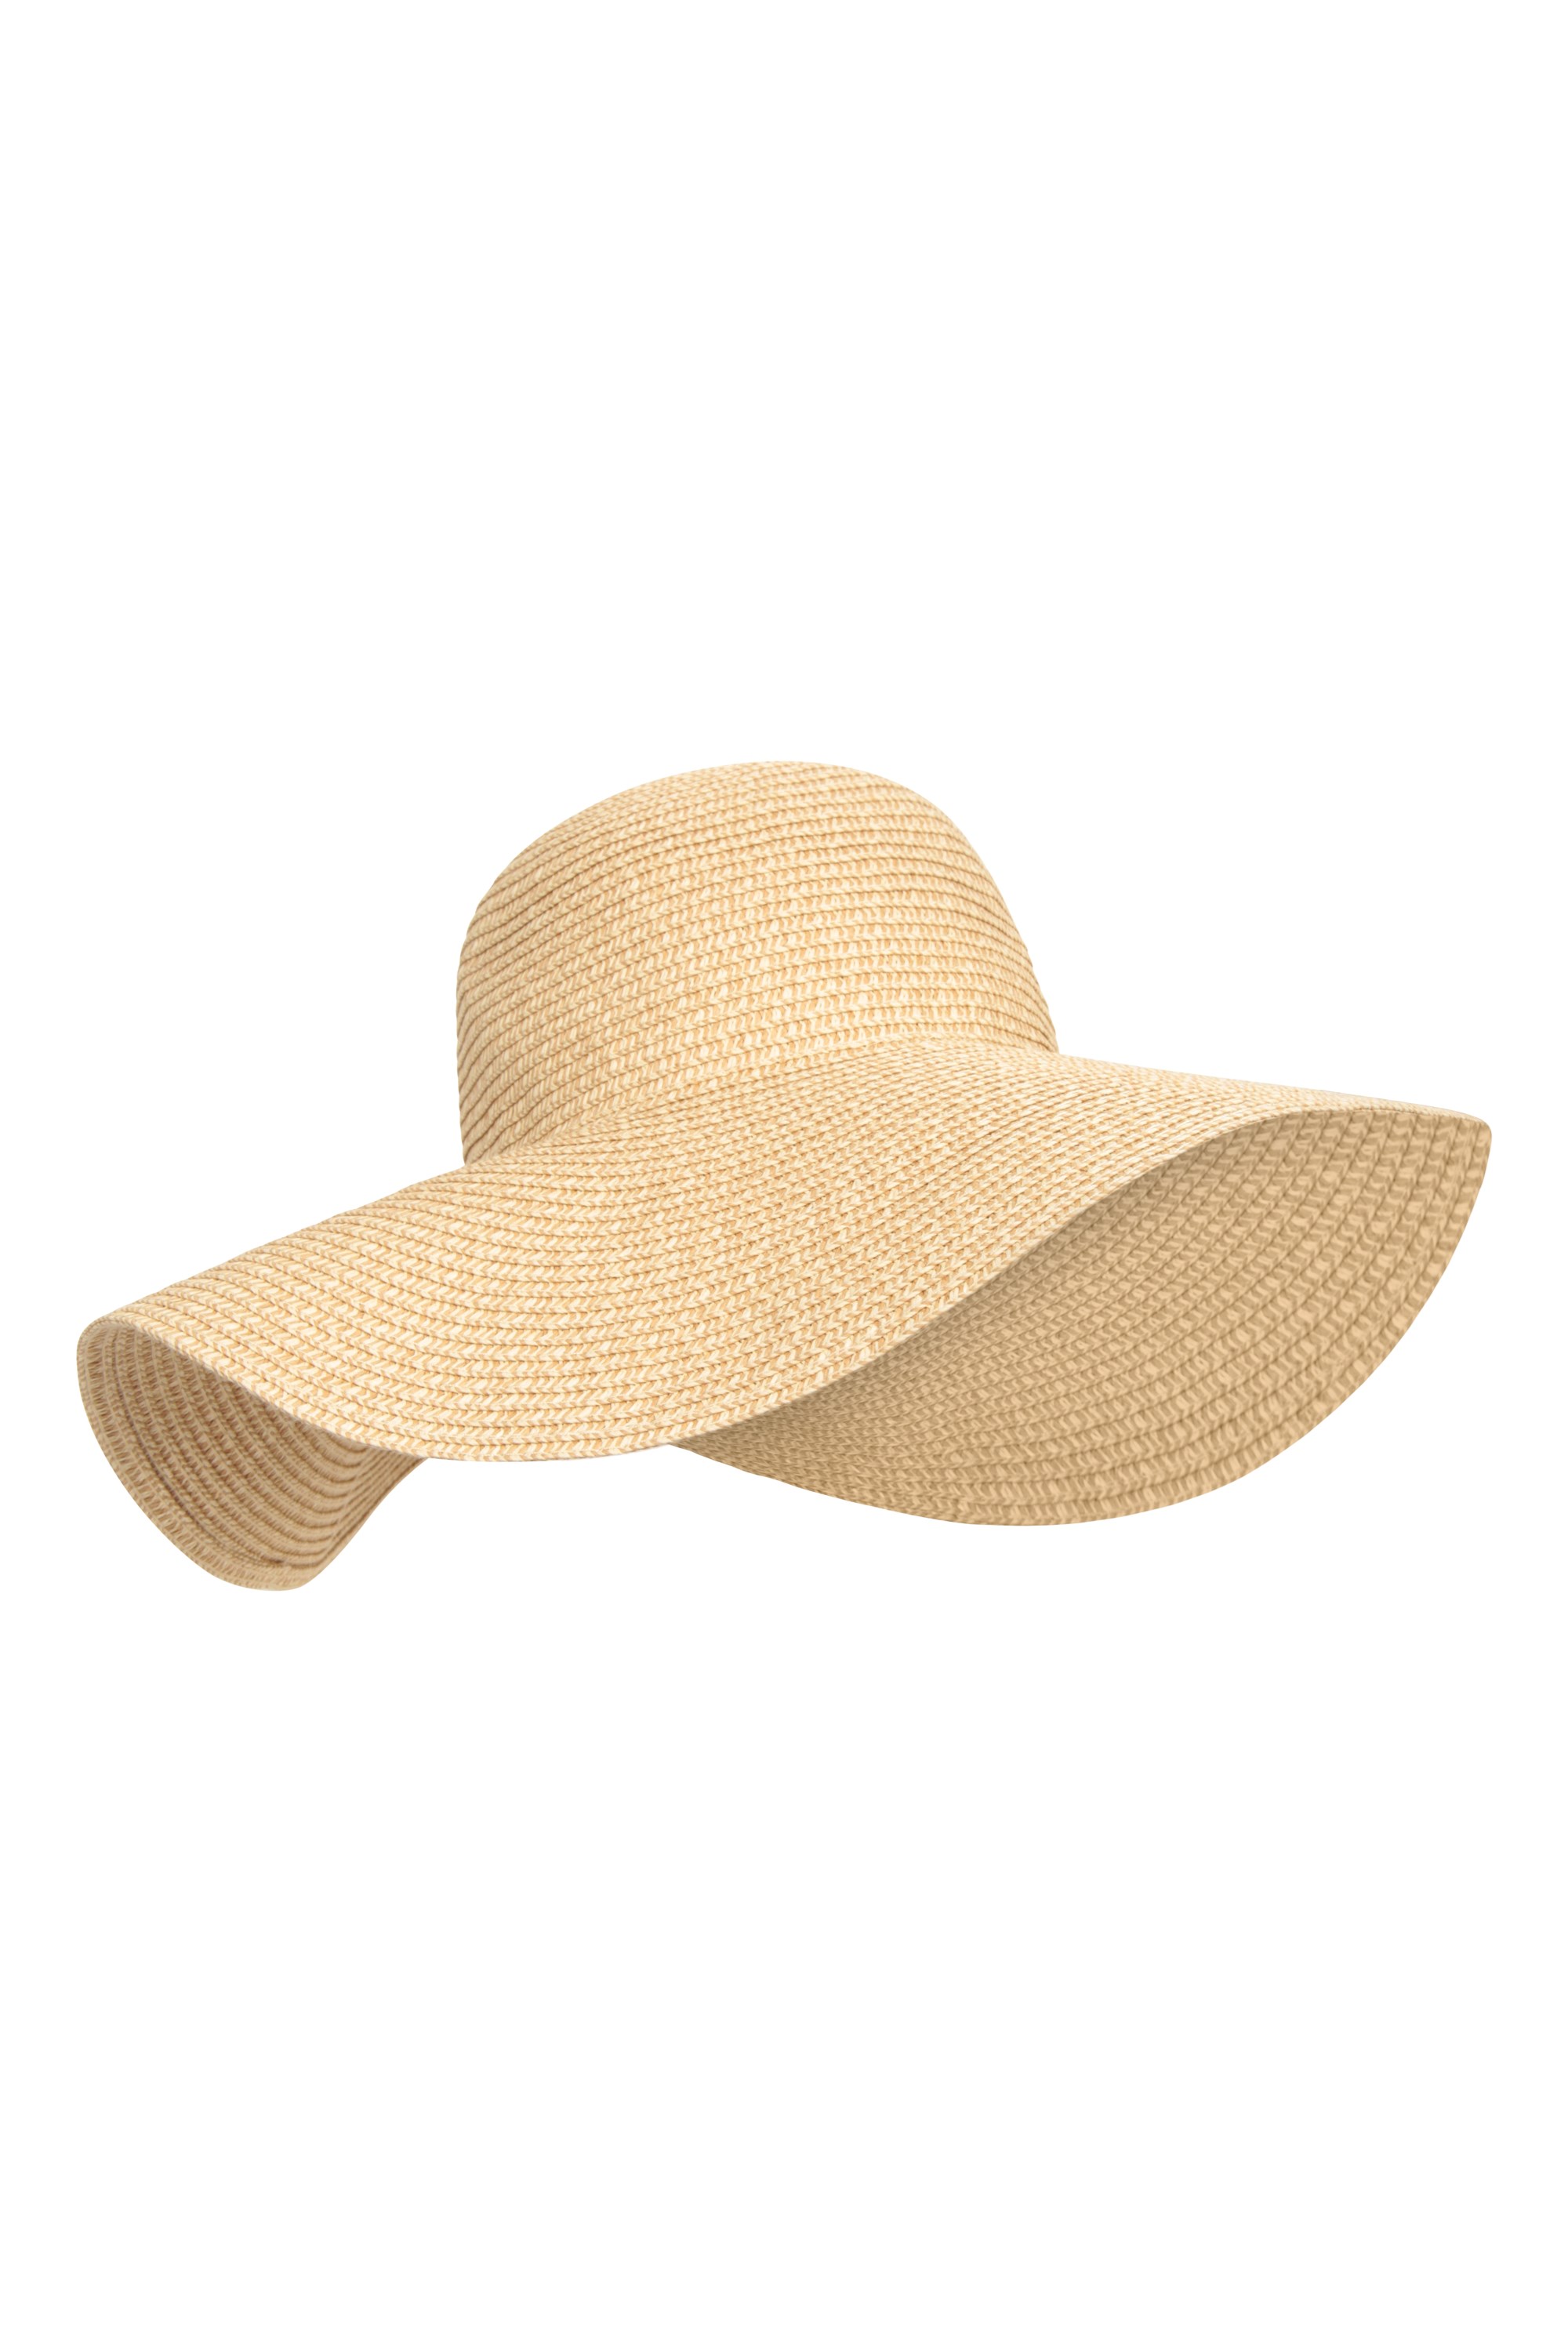 Lily Womens Floppy Sun Hat